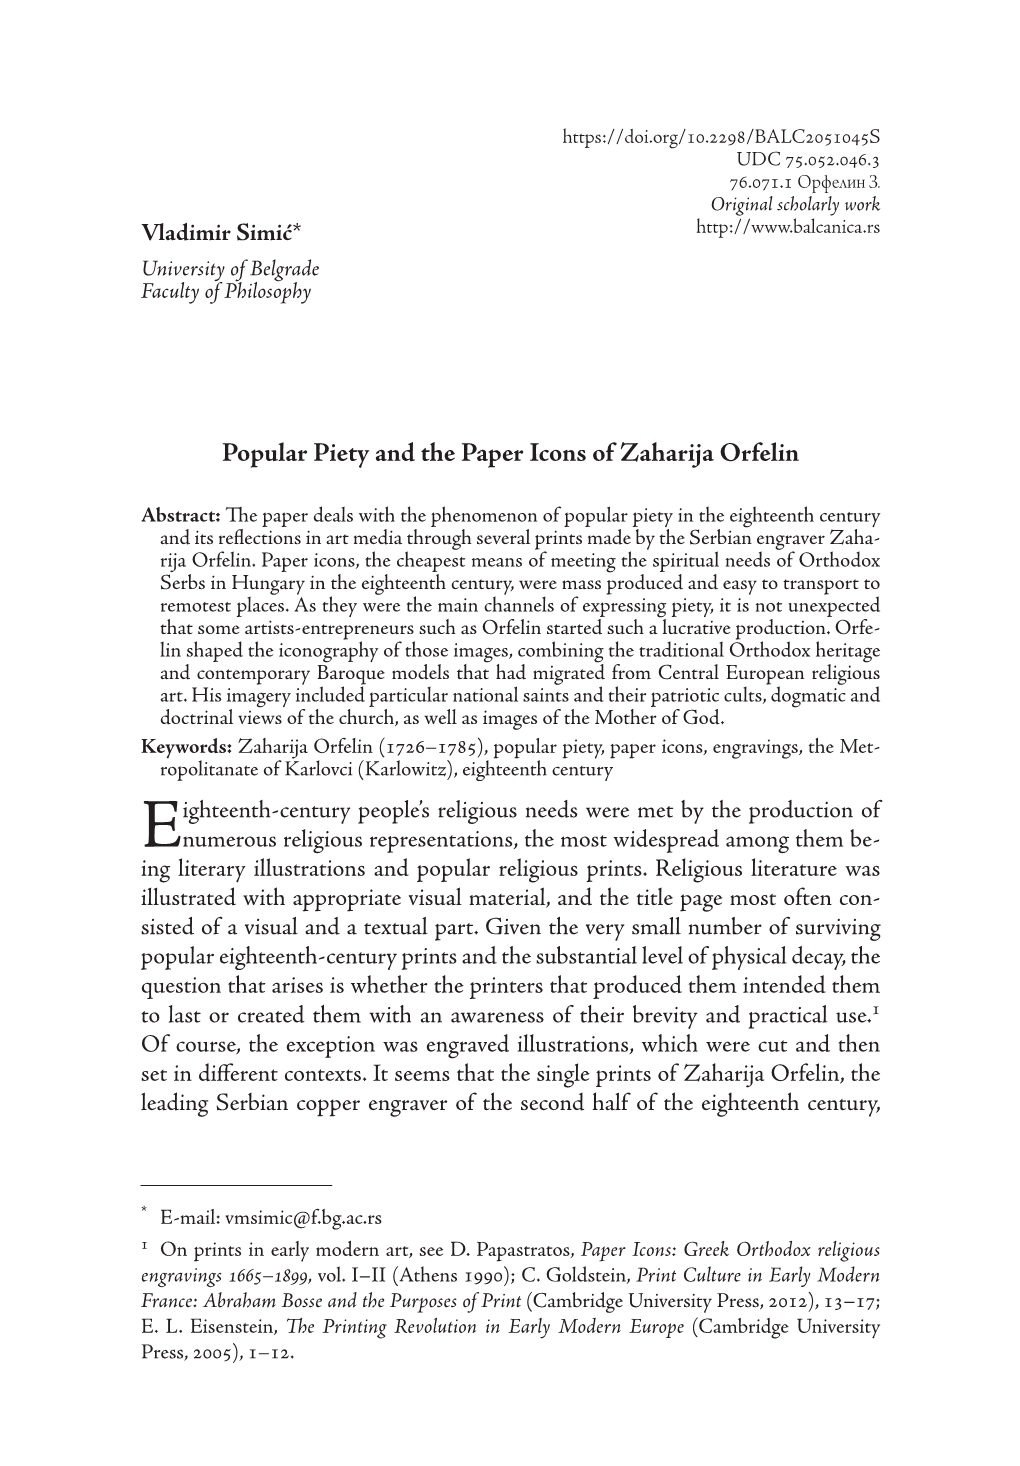 Popular Piety and the Paper Icons of Zaharija Orfelin